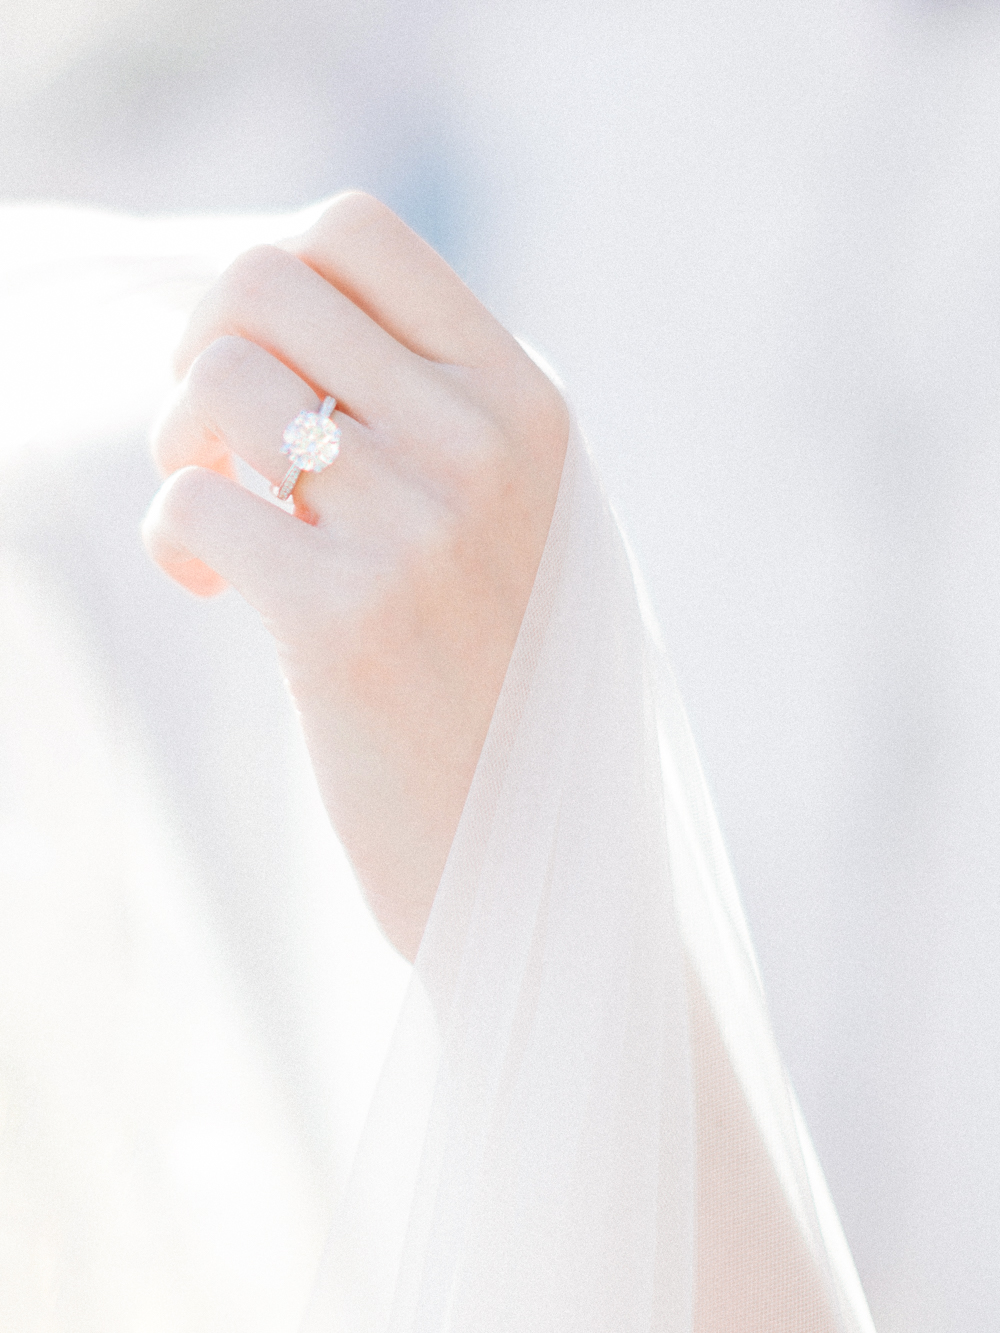 Diamond ring on the bride's finger holding a fairytale veil